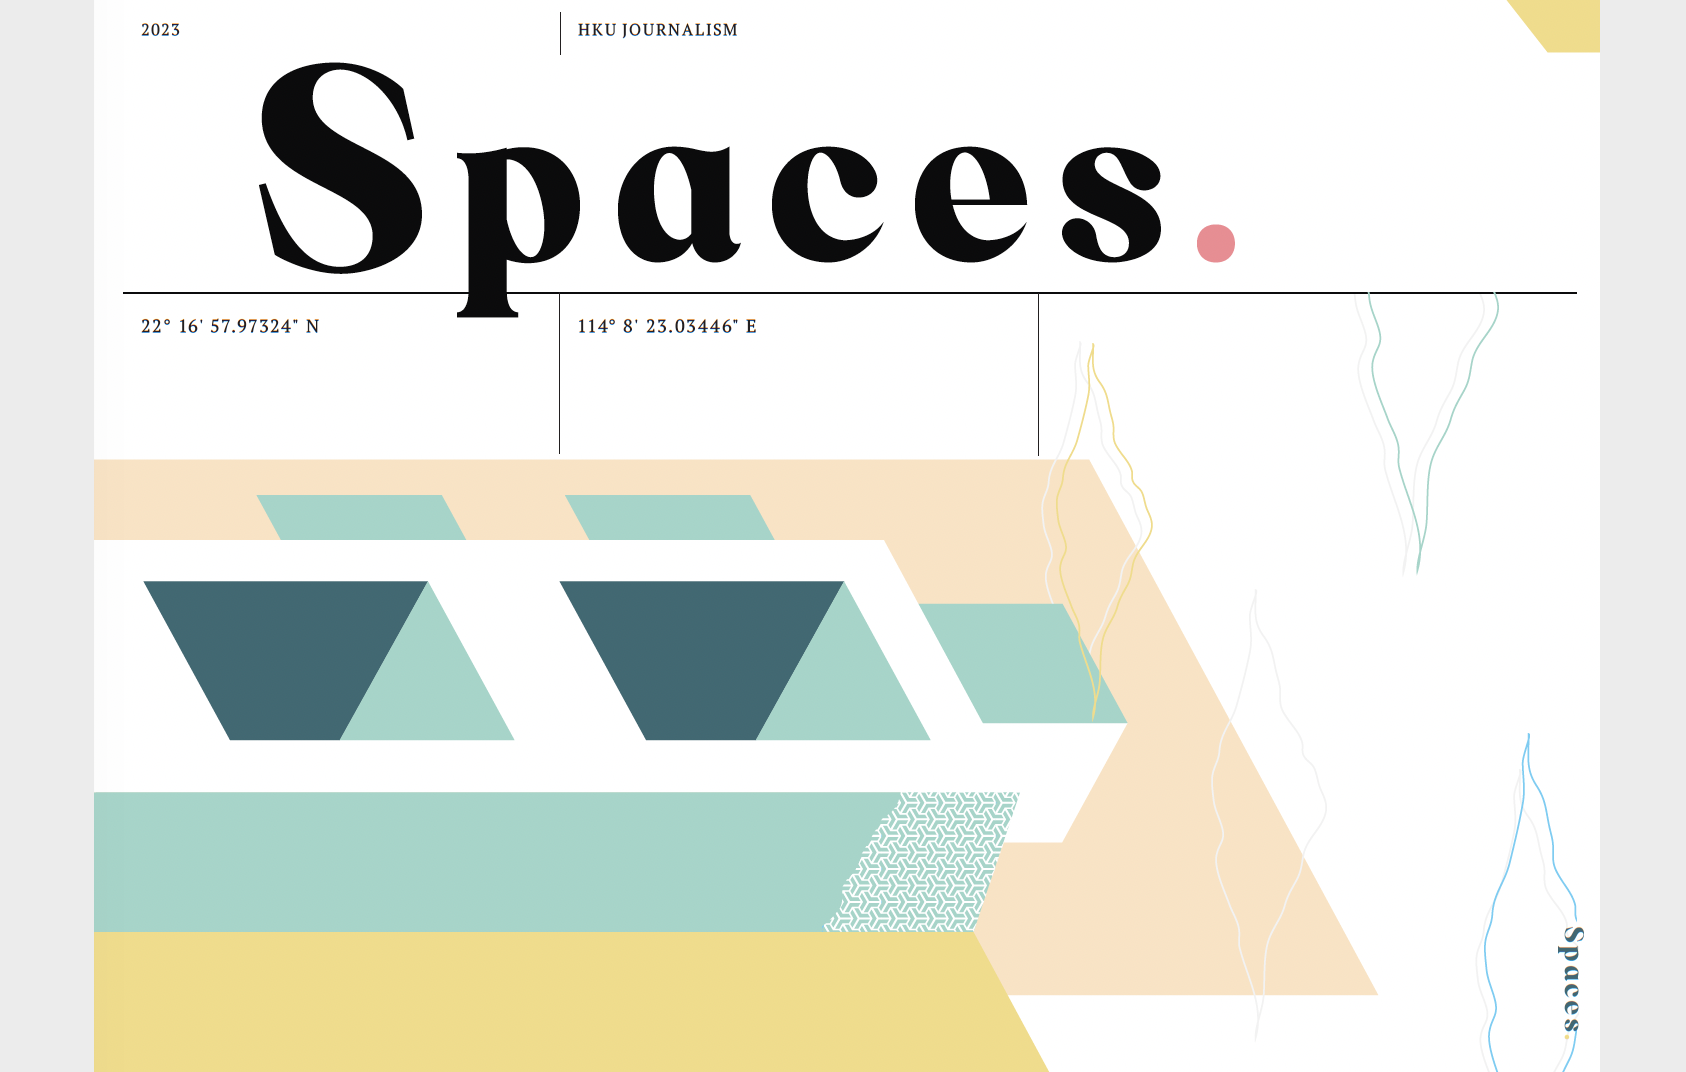 Spaces magazine